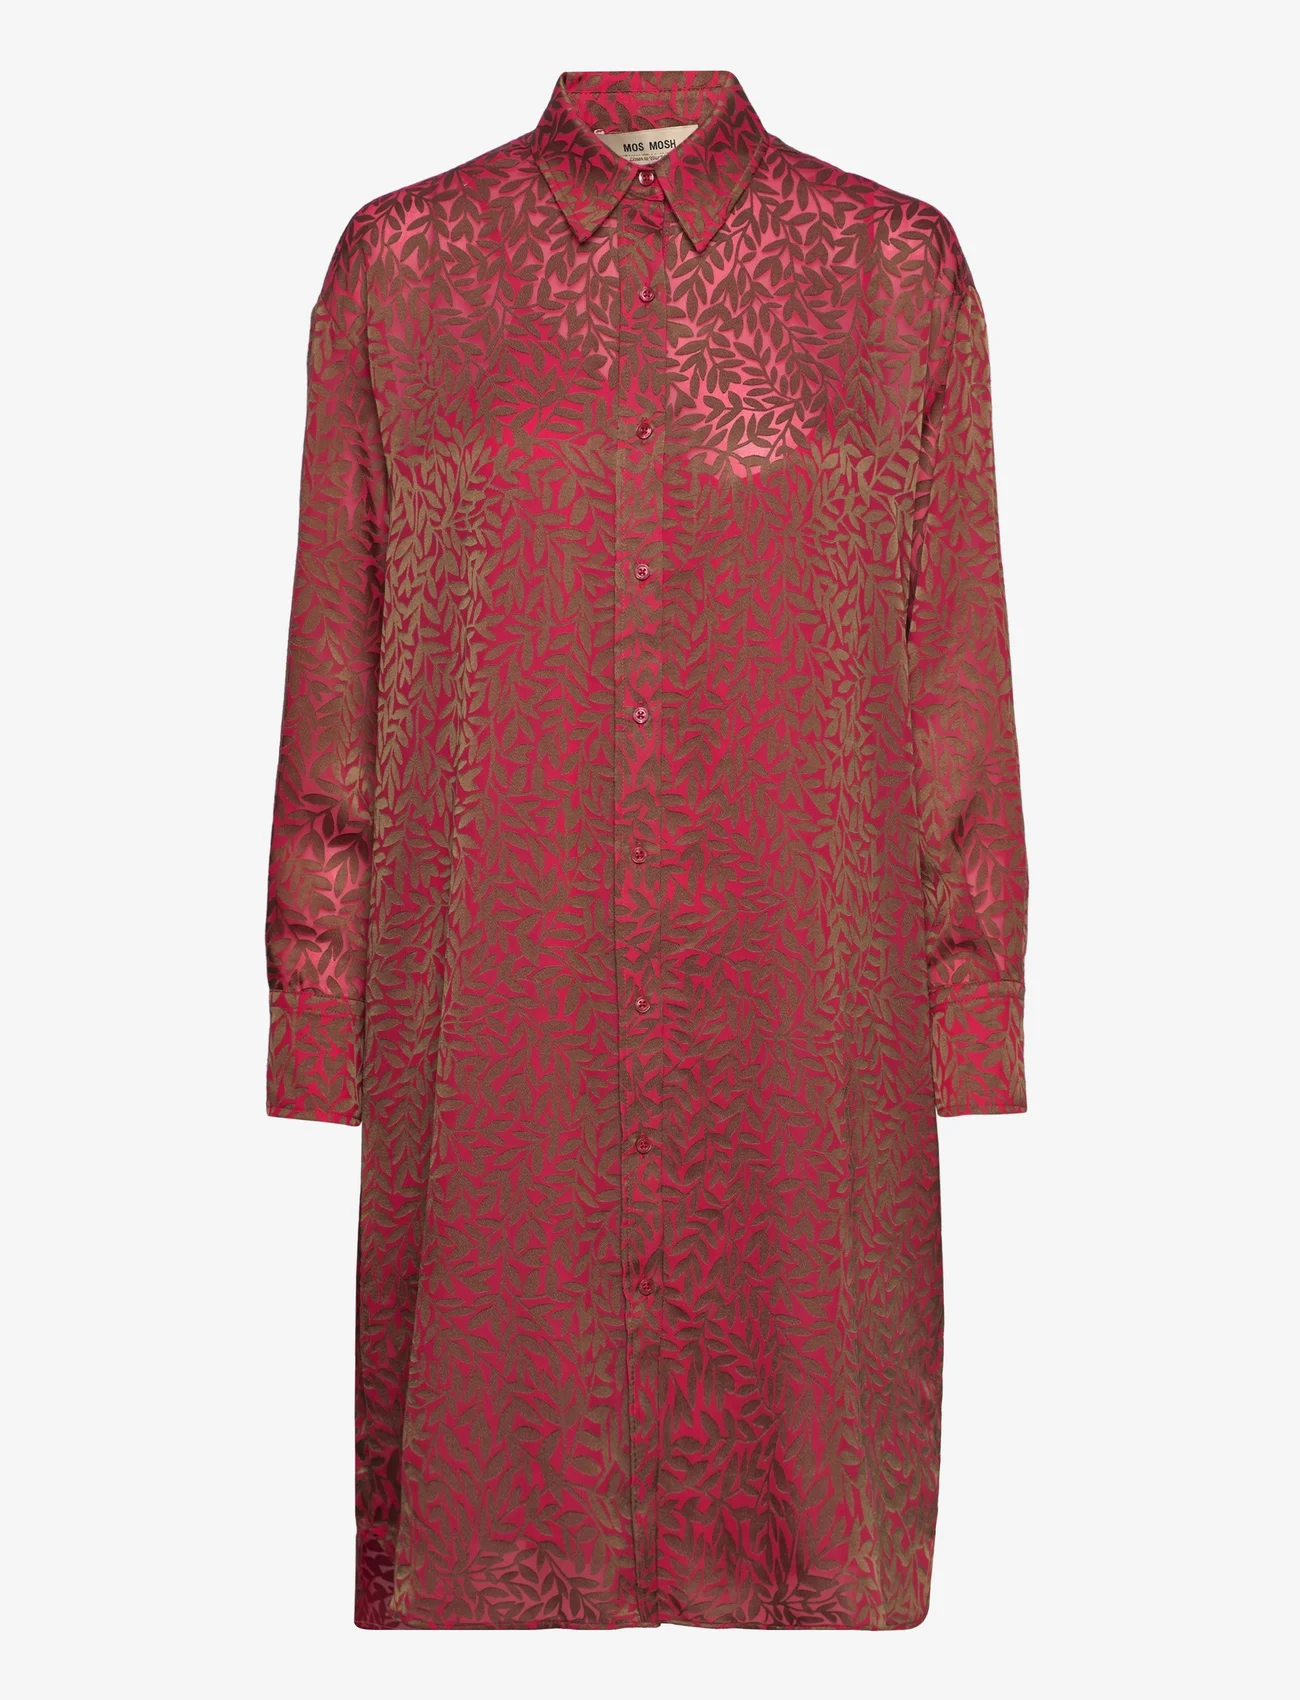 MOS MOSH - Leela Valencia Shirt Dress - shirt dresses - teaberry - 0